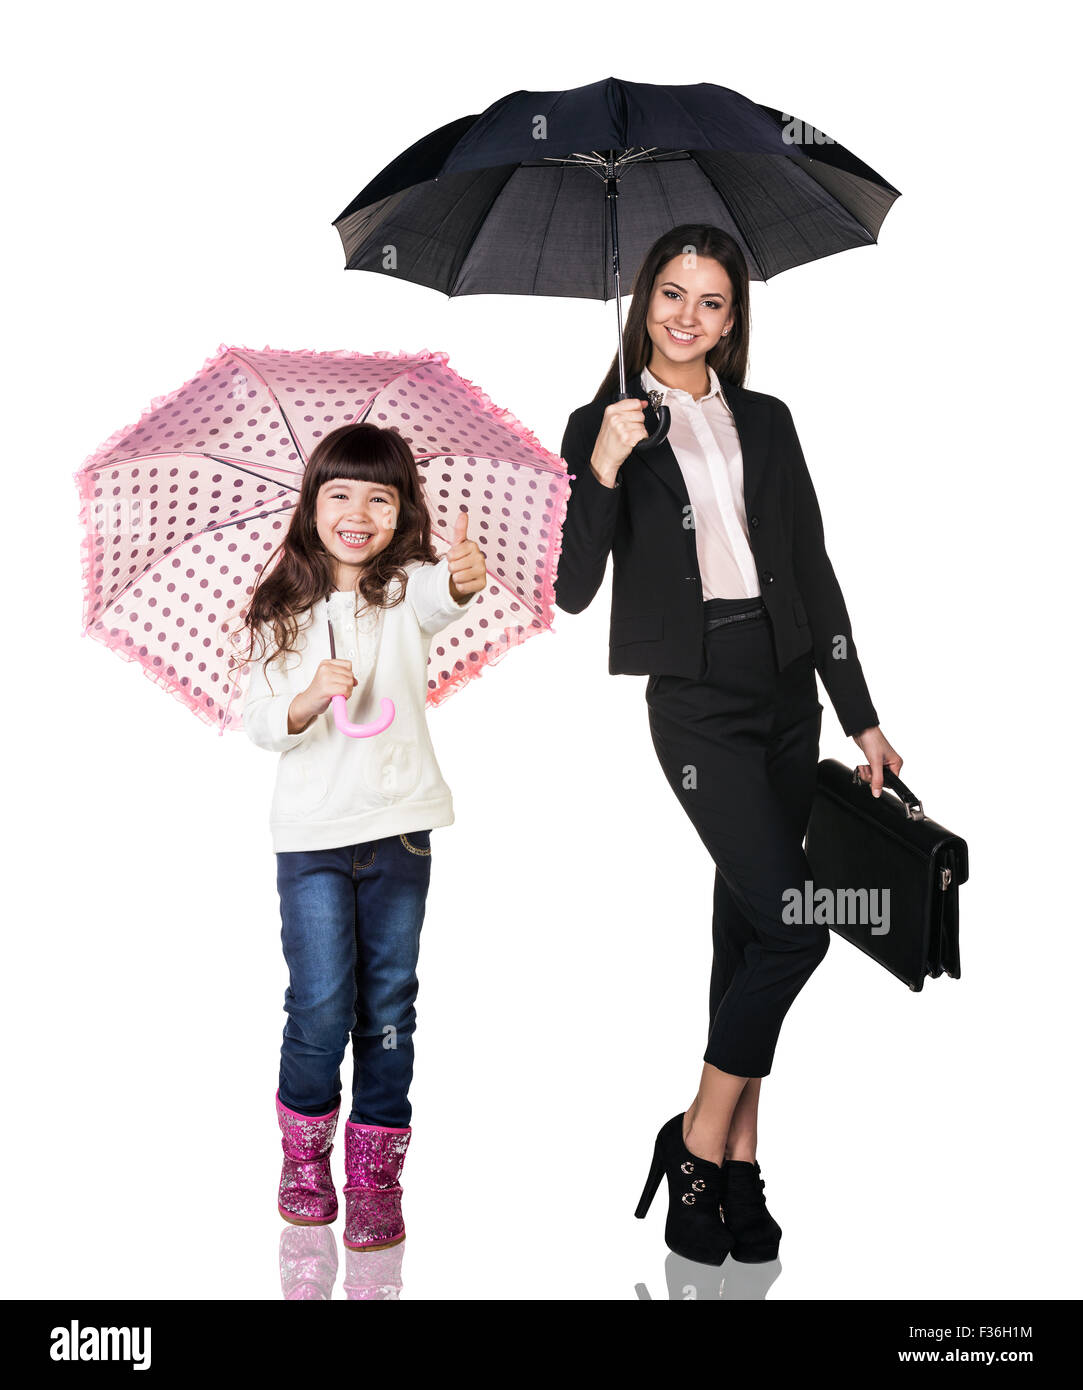 Businesswoman with daughter under umbrellas Stock Photo